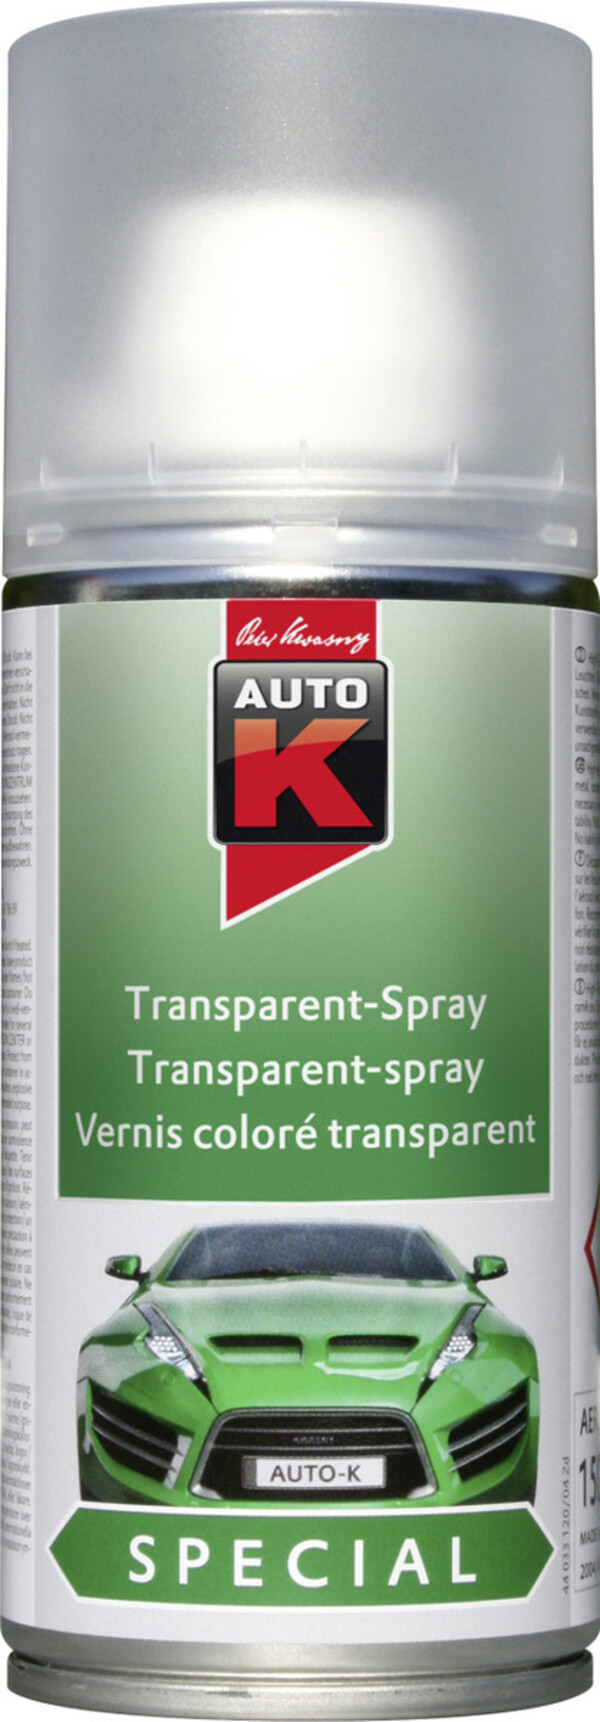 Bild 1 von Auto-K Transparent Remover Special farblos 150ml 0680401504